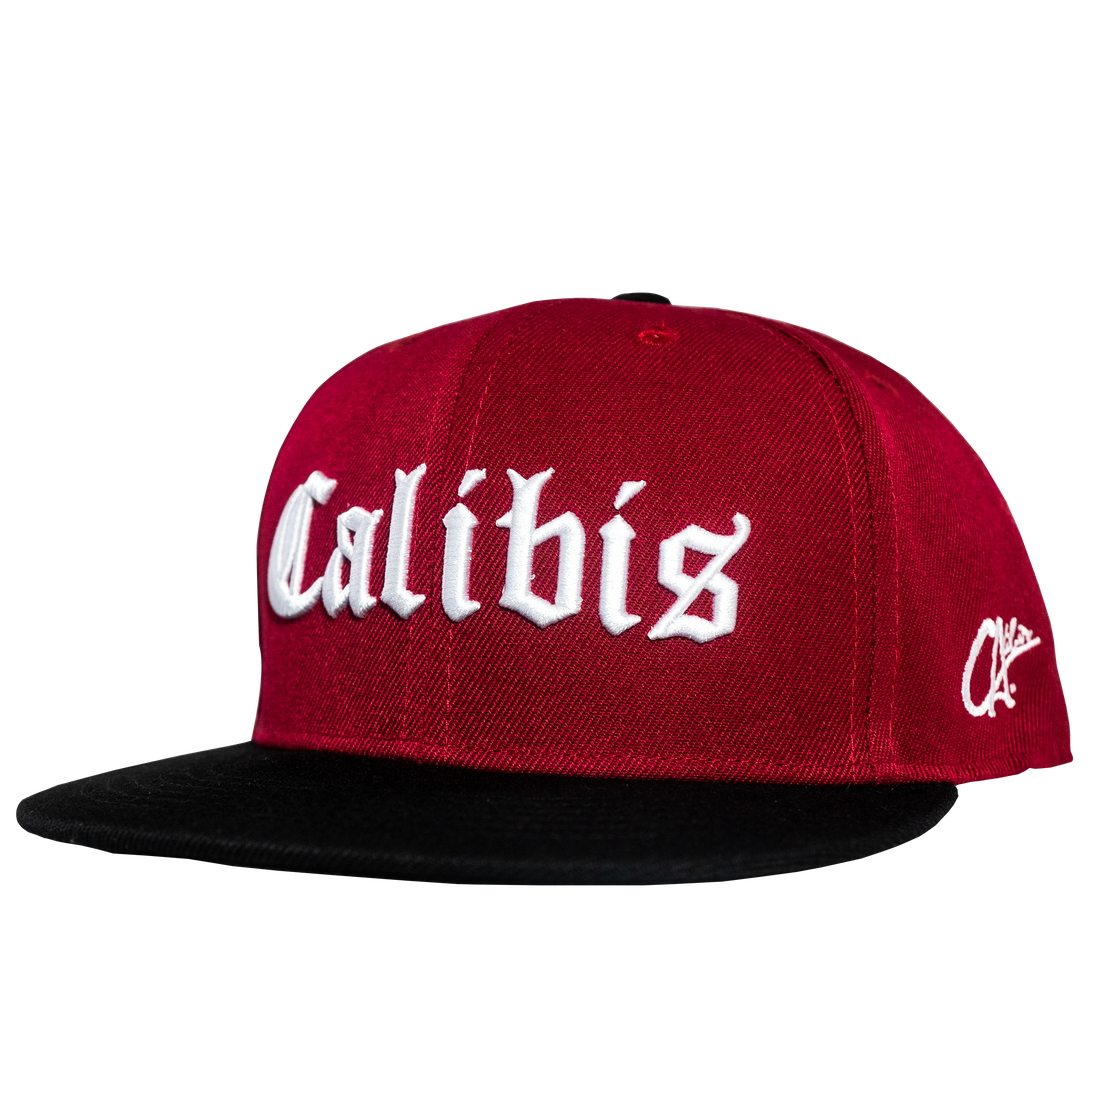 West Coast Calibis Logo Snapback